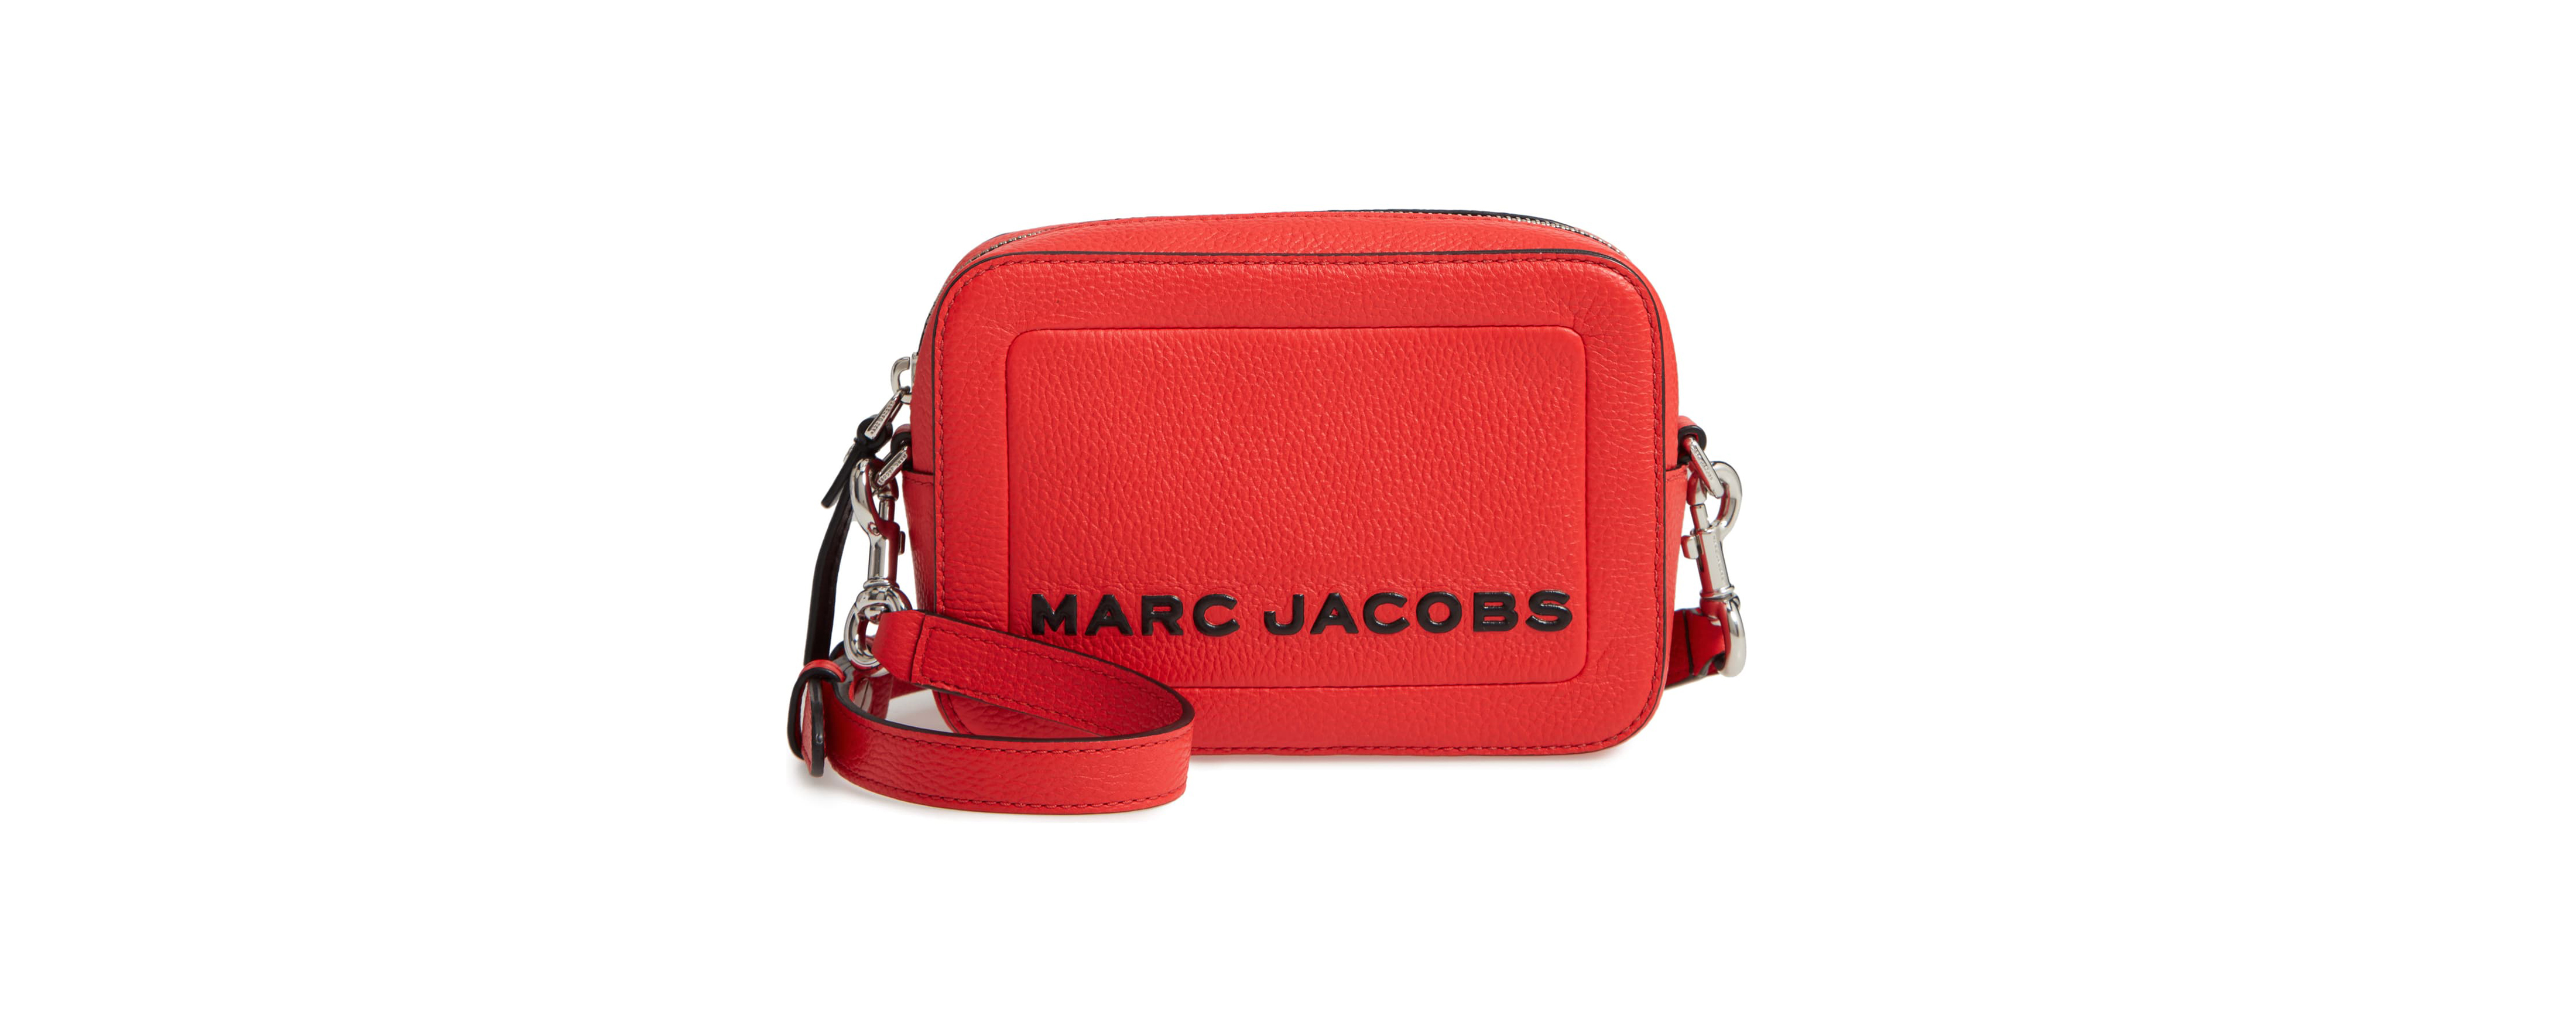 Marc by Marc Jacobs diaper bag - Crossbody Bags - Hiawatha, Iowa